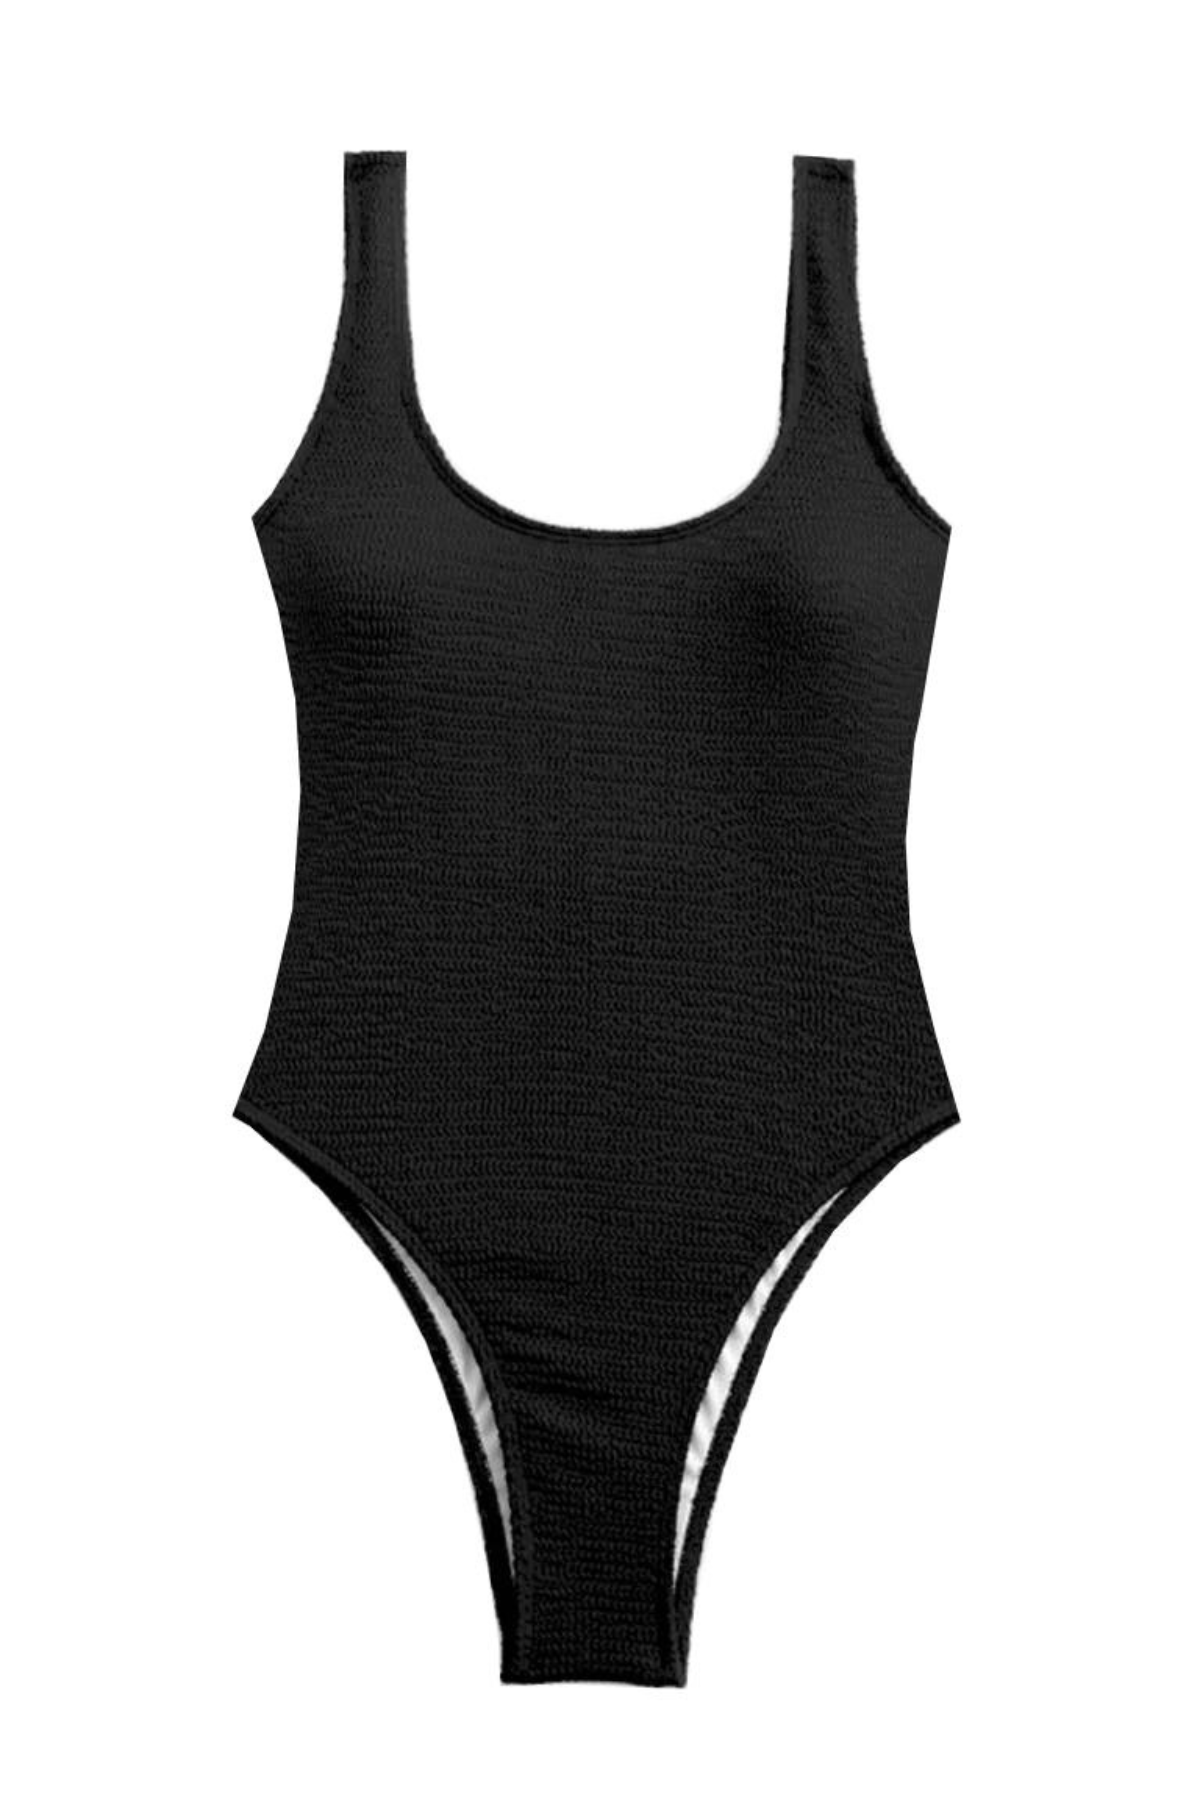 Tammy Crinkle One Piece Swimsuit - Black